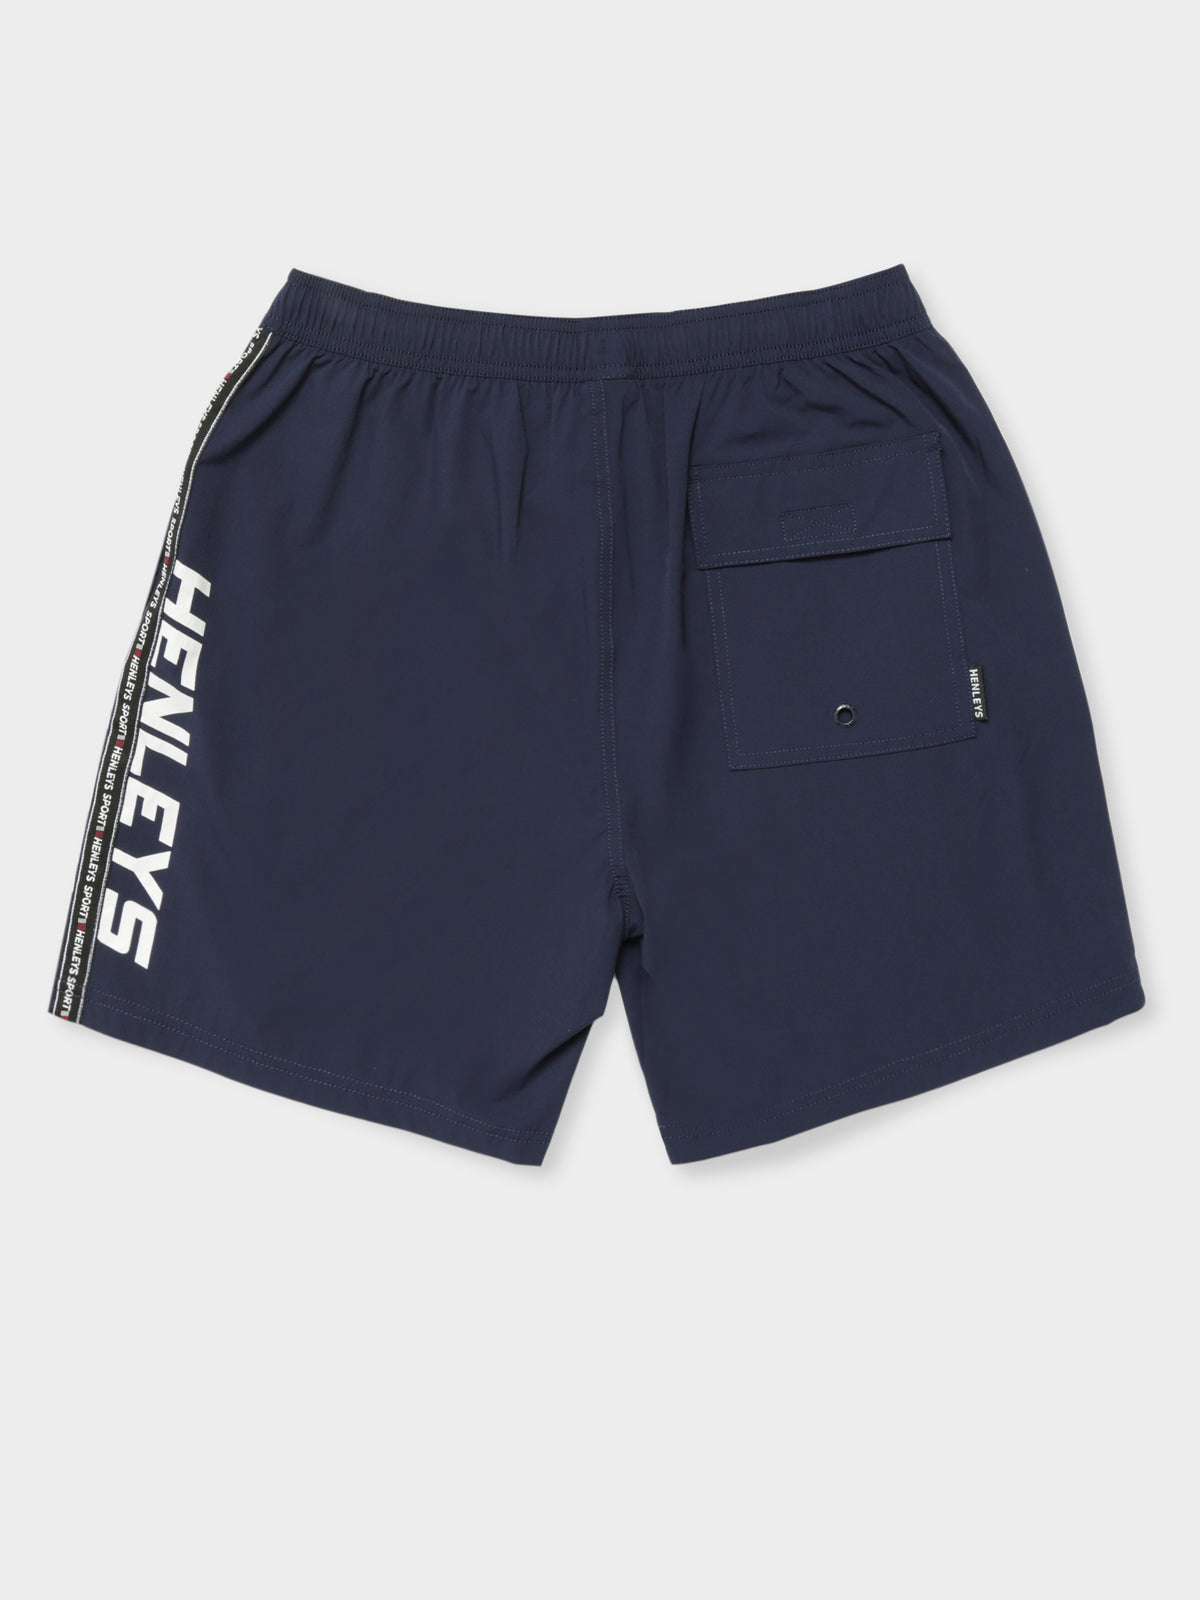 Manu Active Shorts in Navy Blue